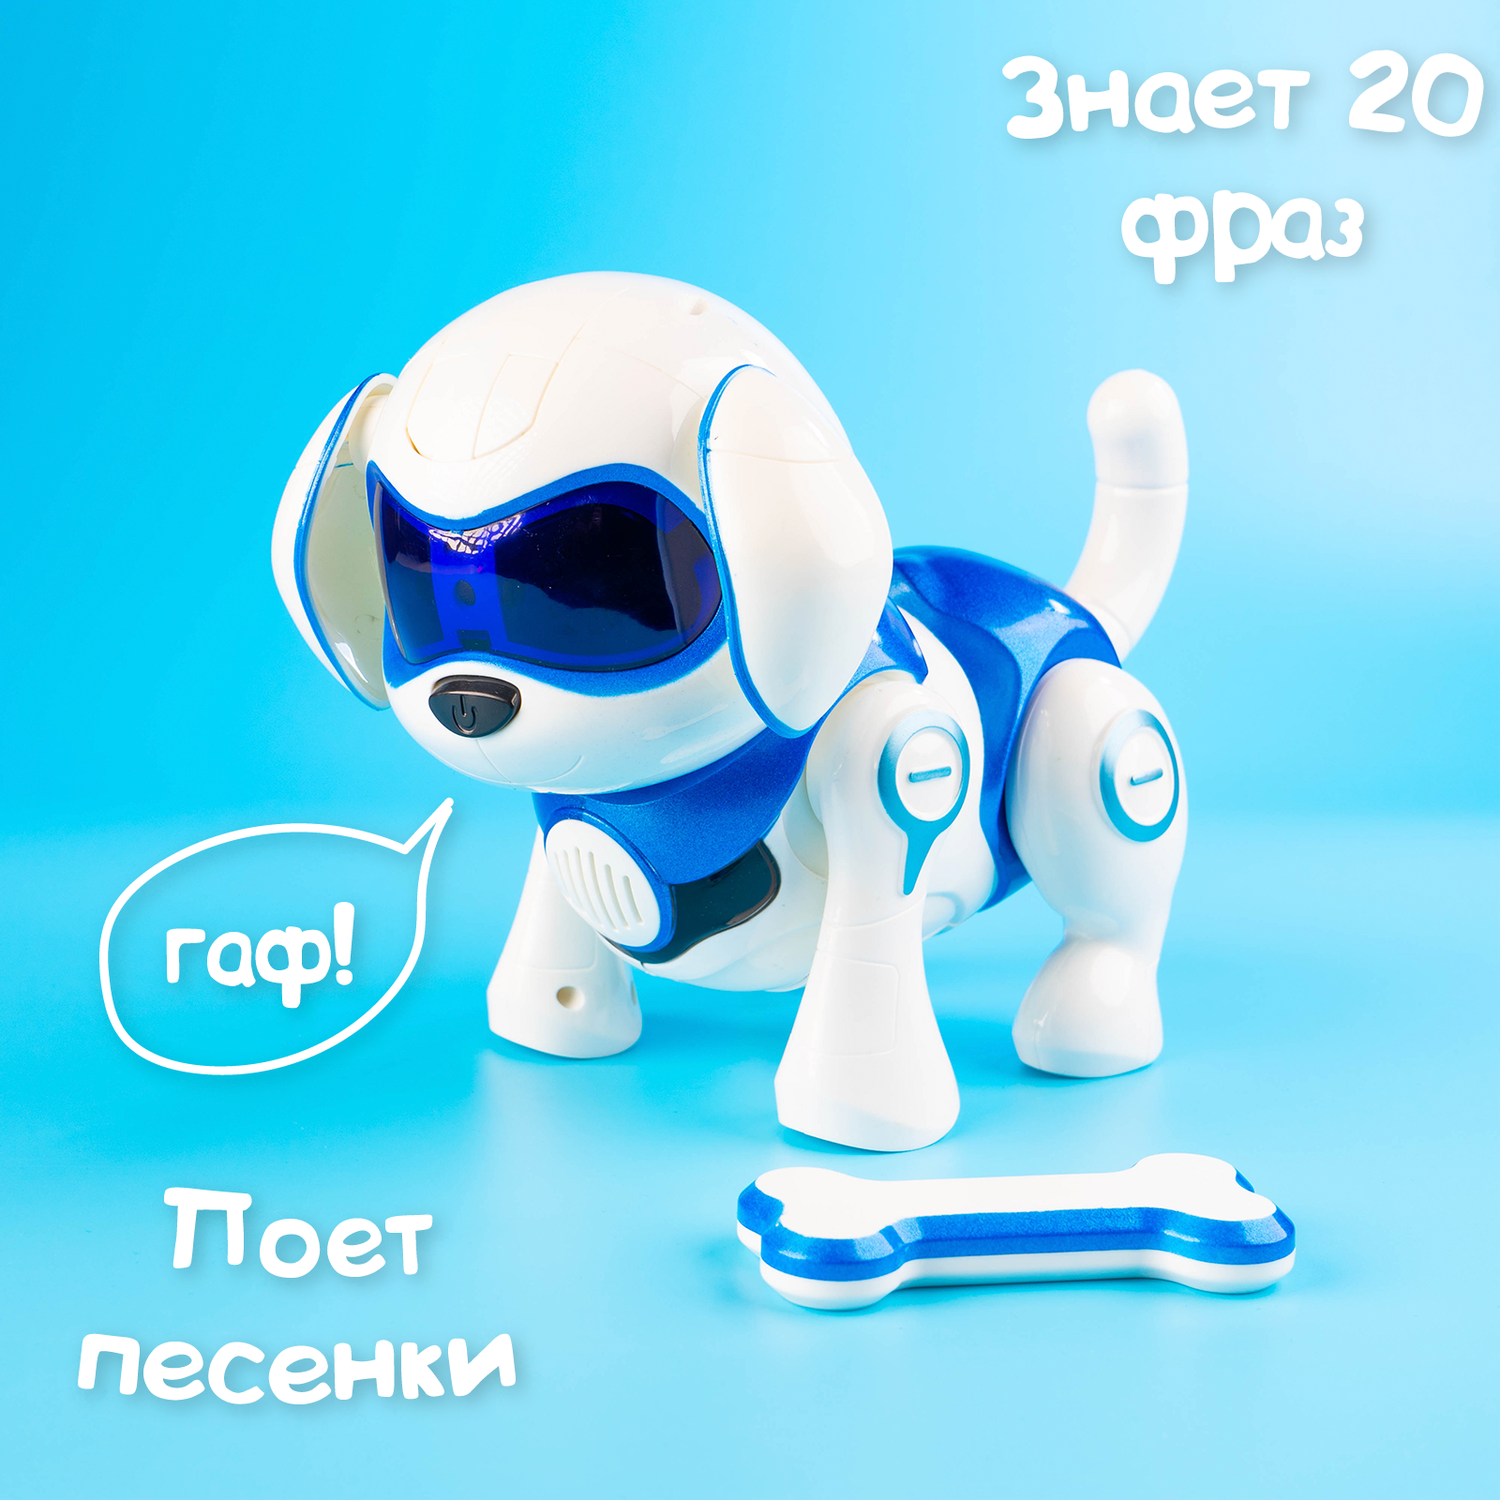 Интерактивная игрушка Zabiaka Робот собака «Чаппи» русское озвучивание цвет синий - фото 7